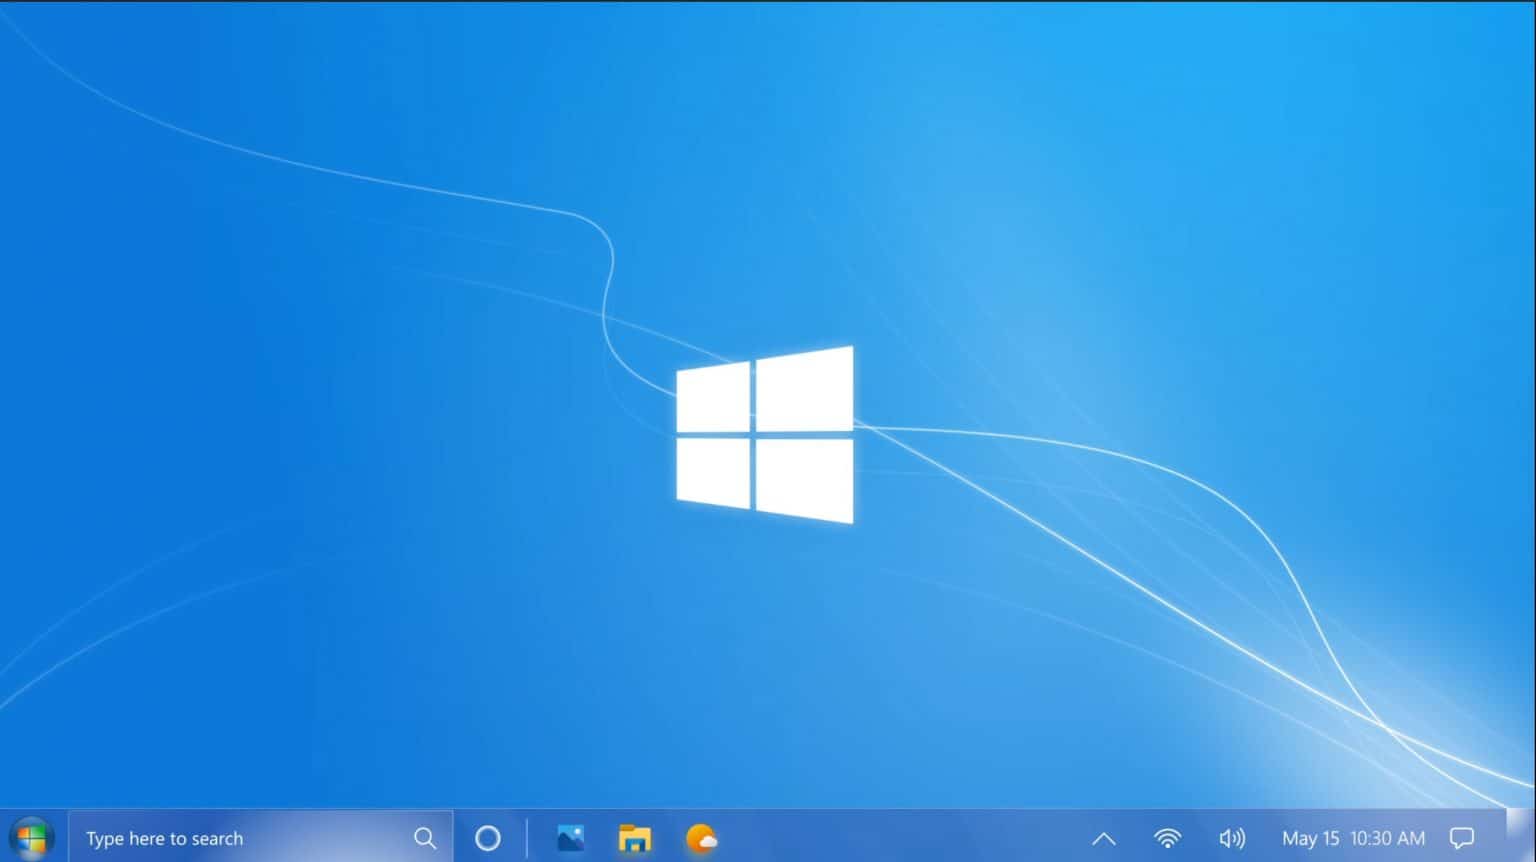 windows 7 2021 edition release date